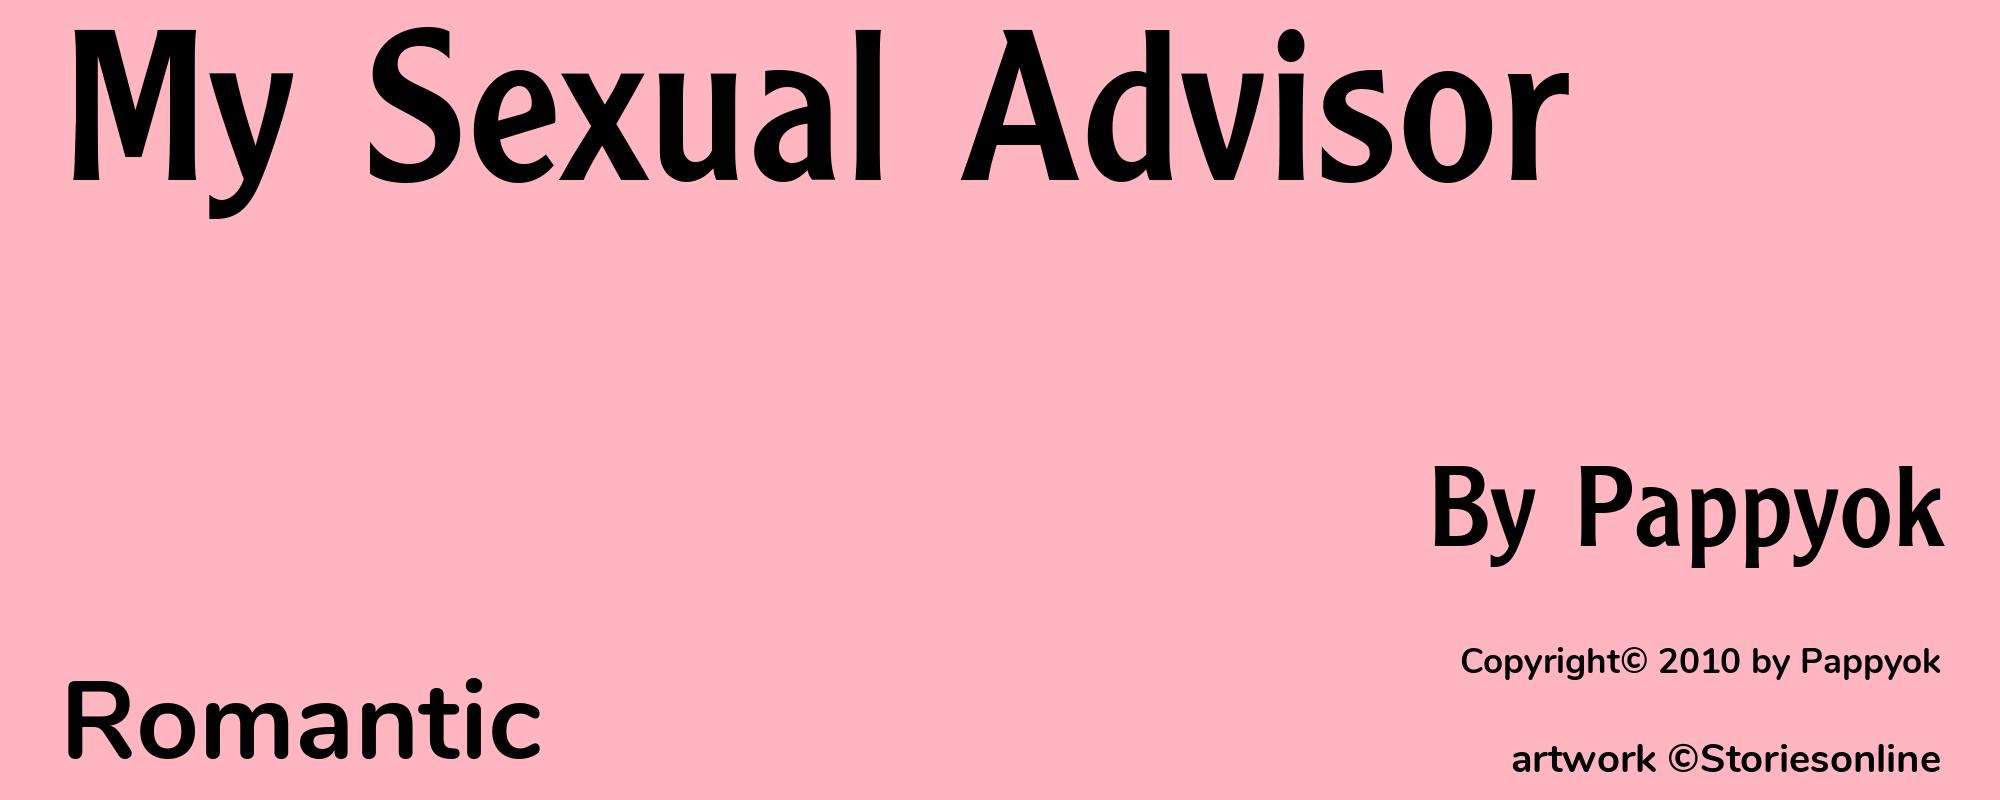 My Sexual Advisor - Cover